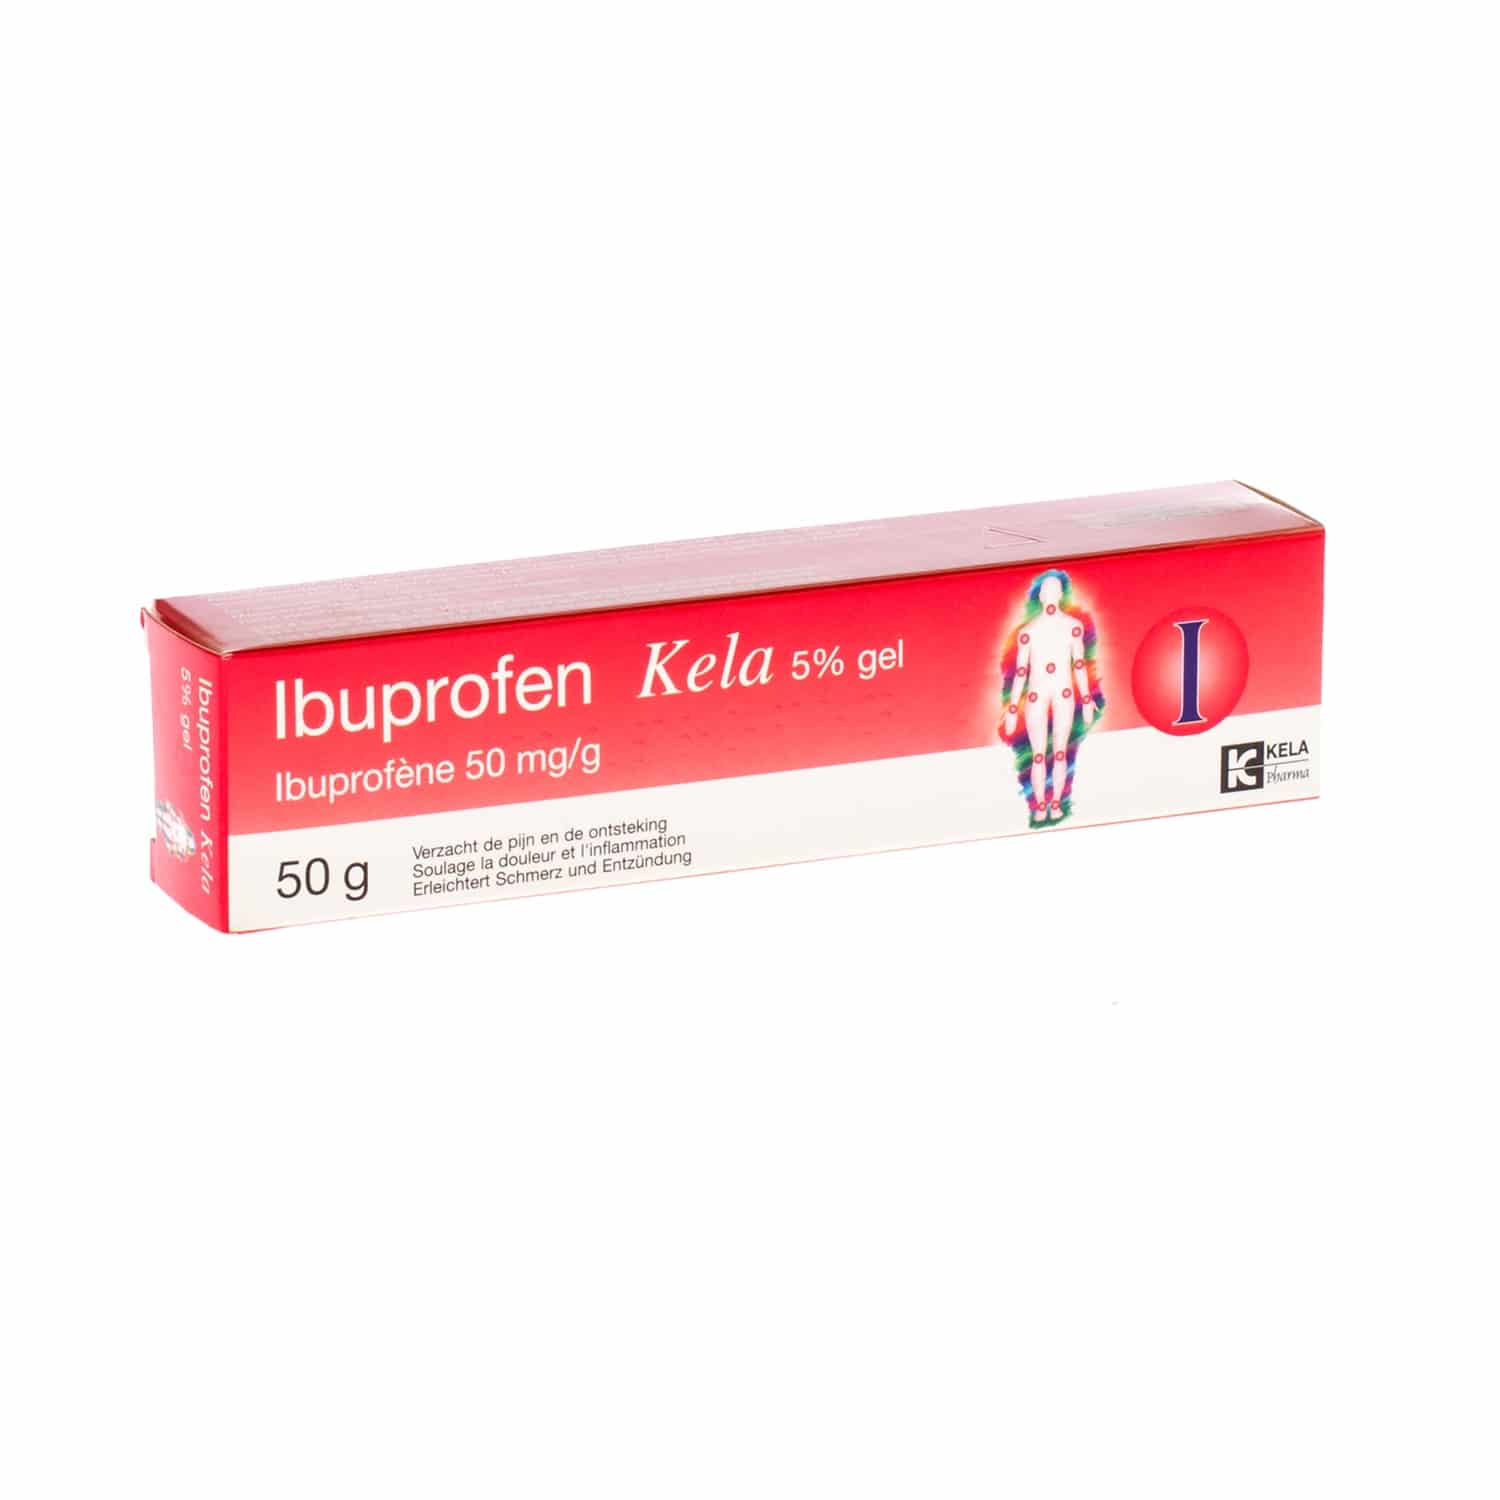 Ibuprofen Kela 5% Gel